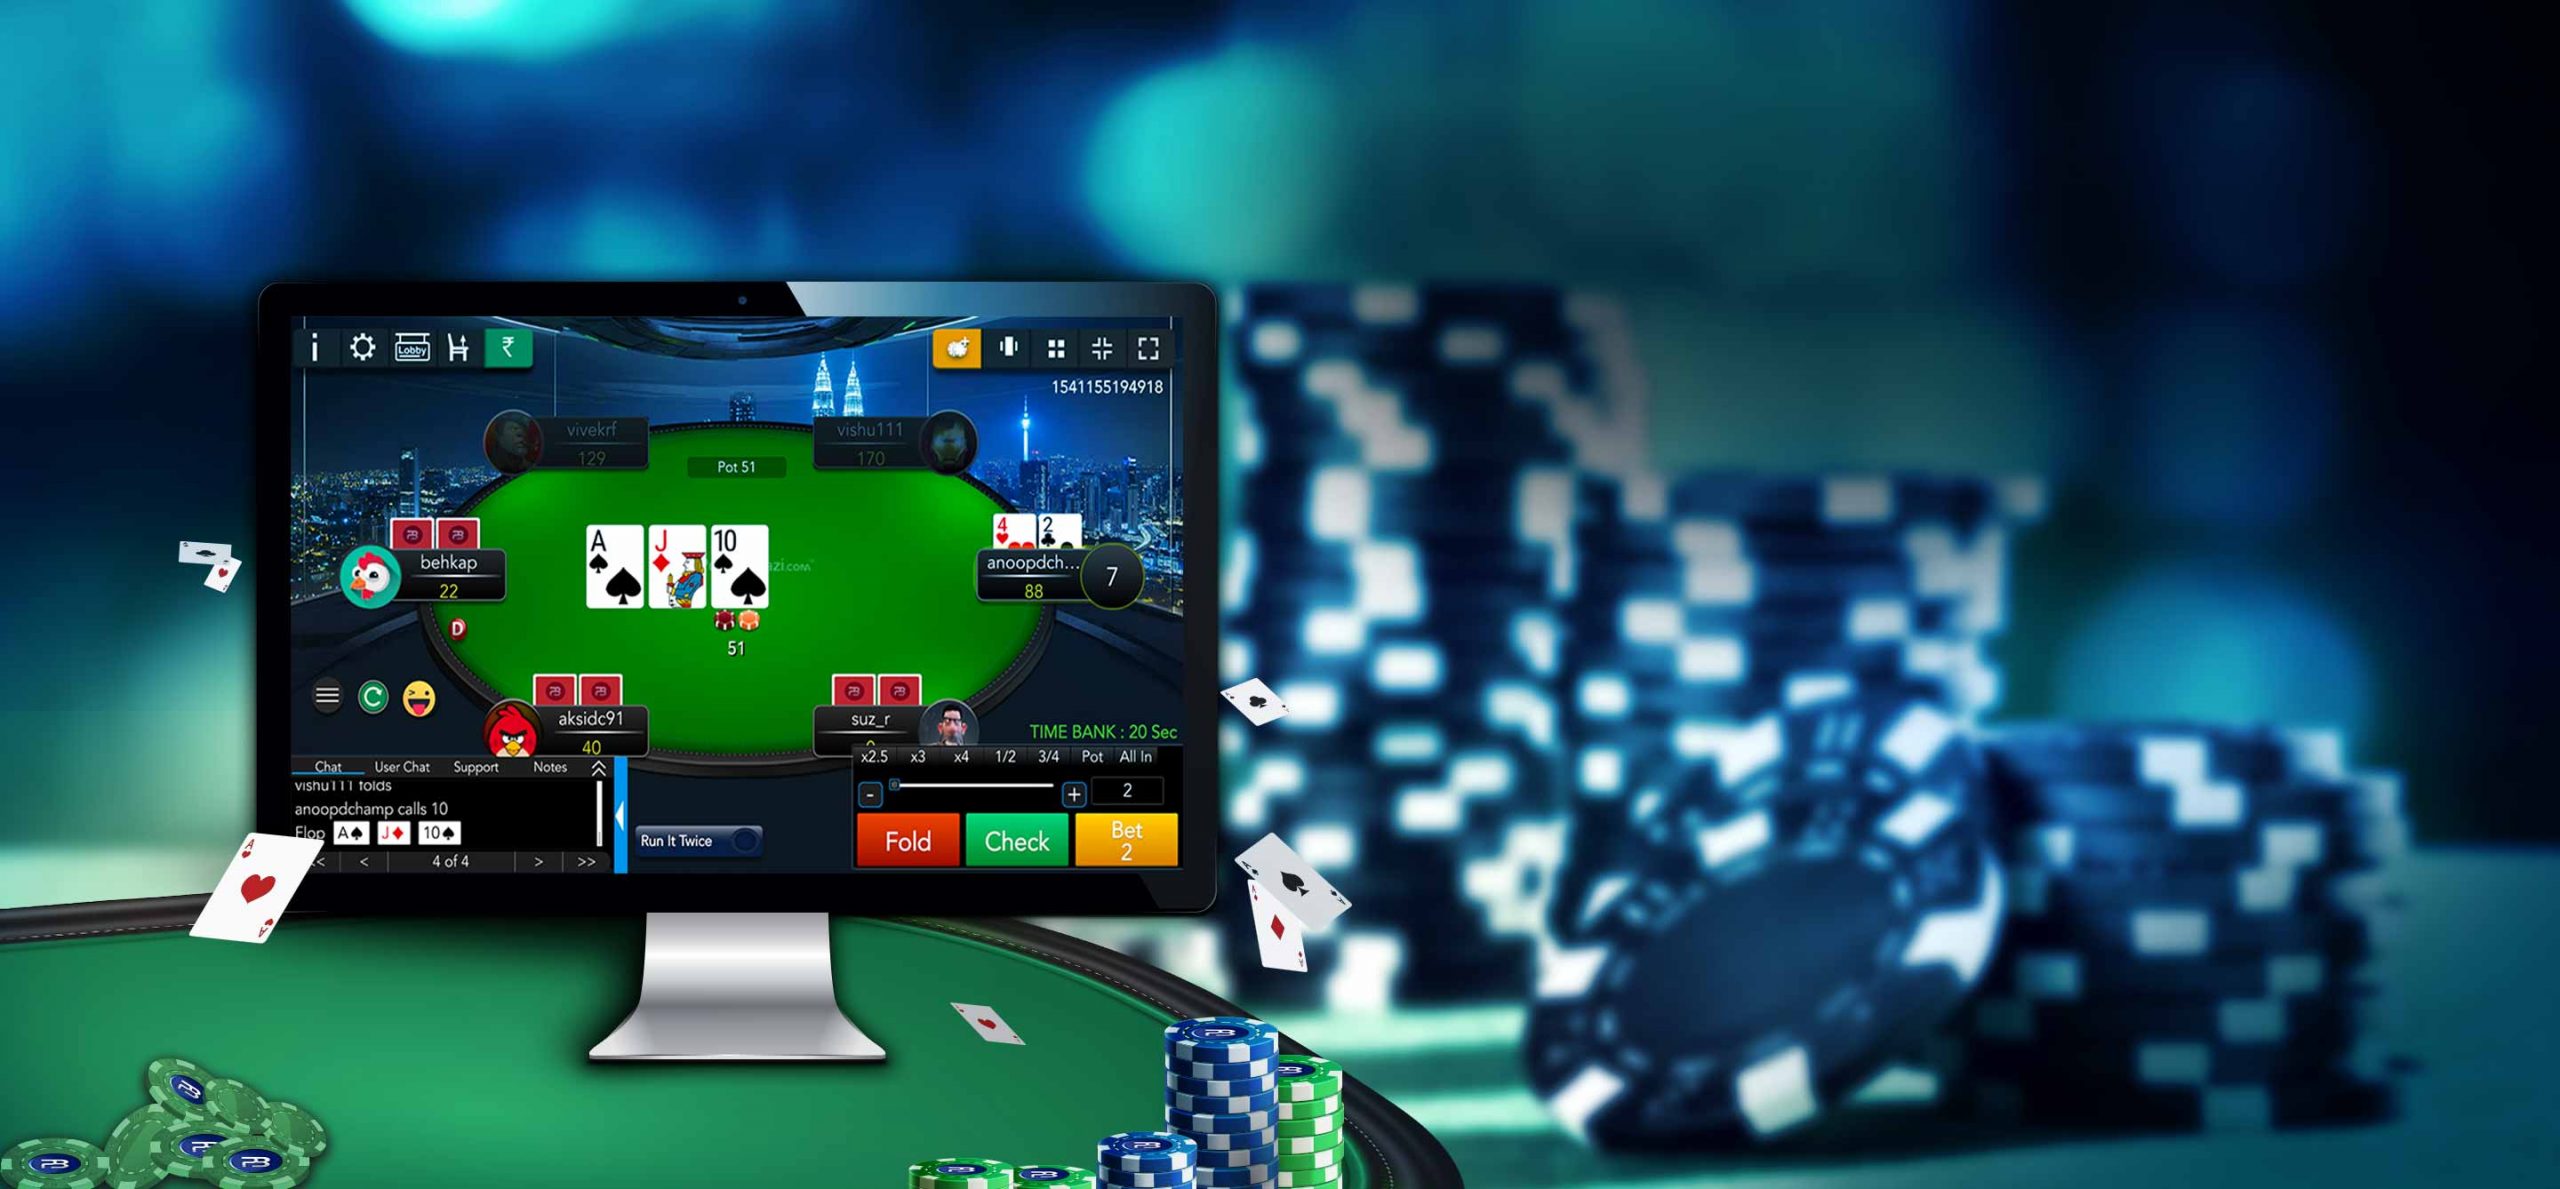 Freecreditreportww Server Resmi IDNsport, IDN Slot, IDN Poker, IDN Live Casino